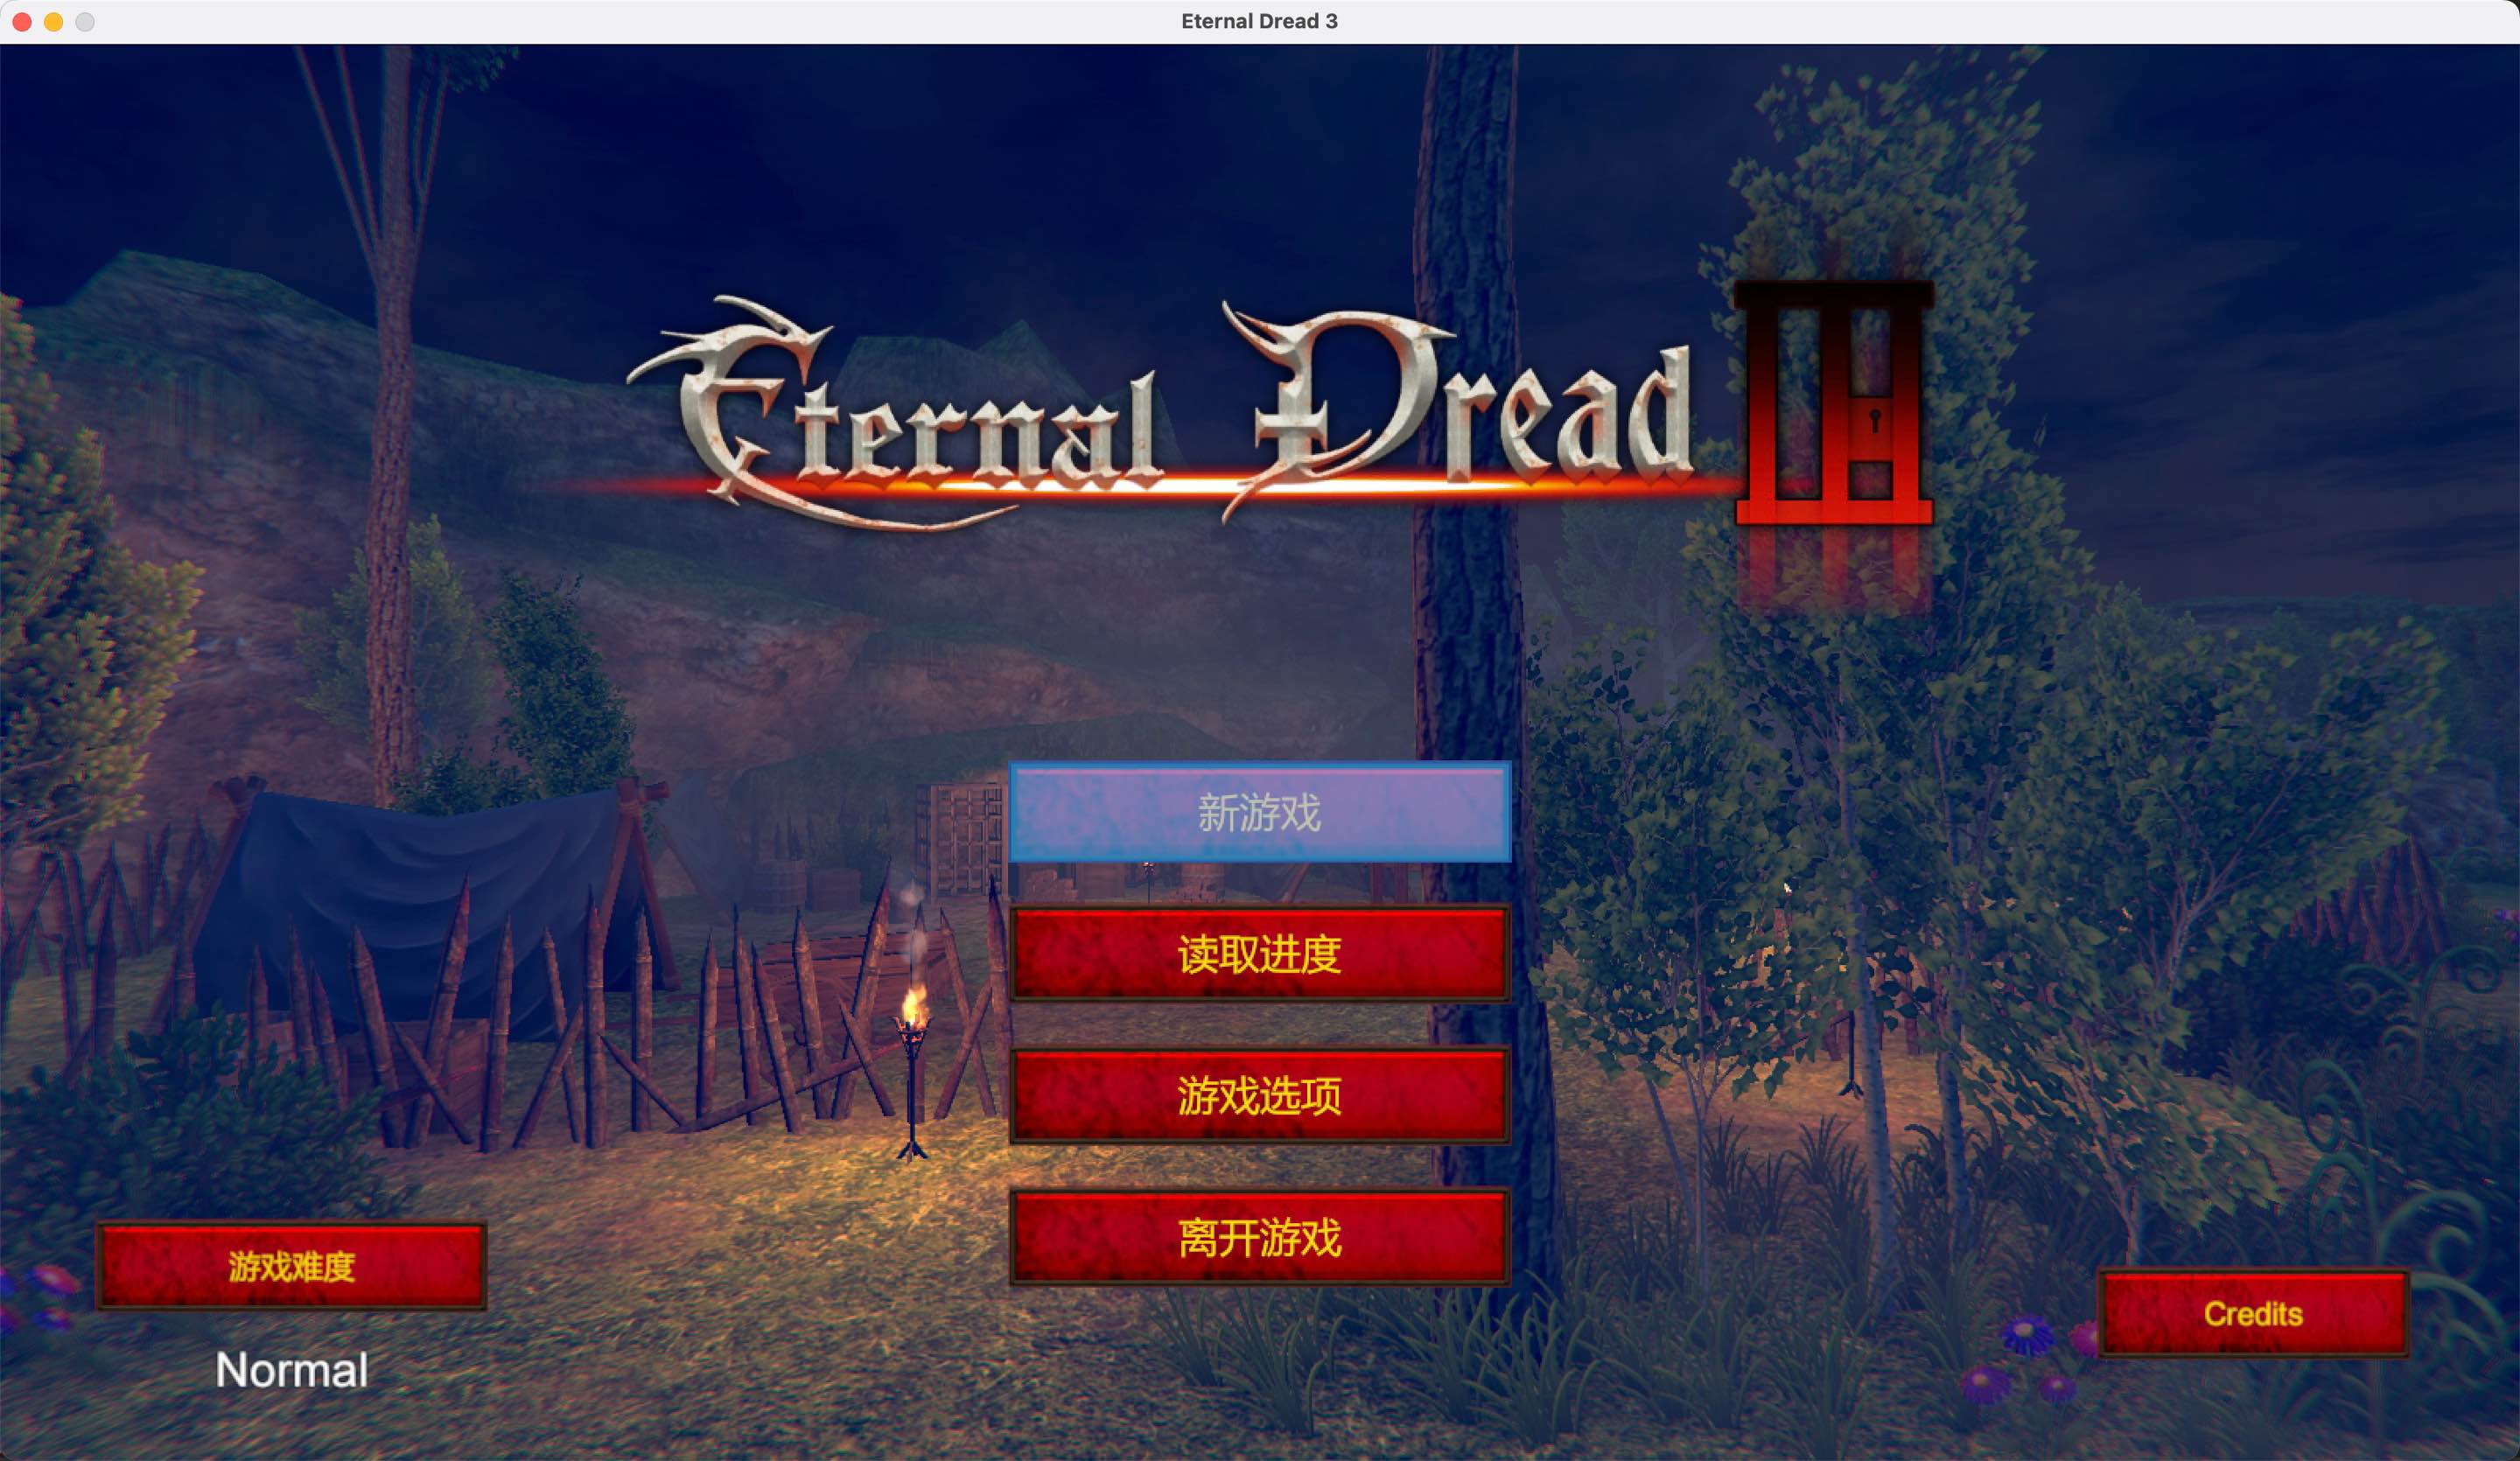 永恒恐惧3 for Mac v1.0 Eternal Dread 3 中文移植版 苹果电脑